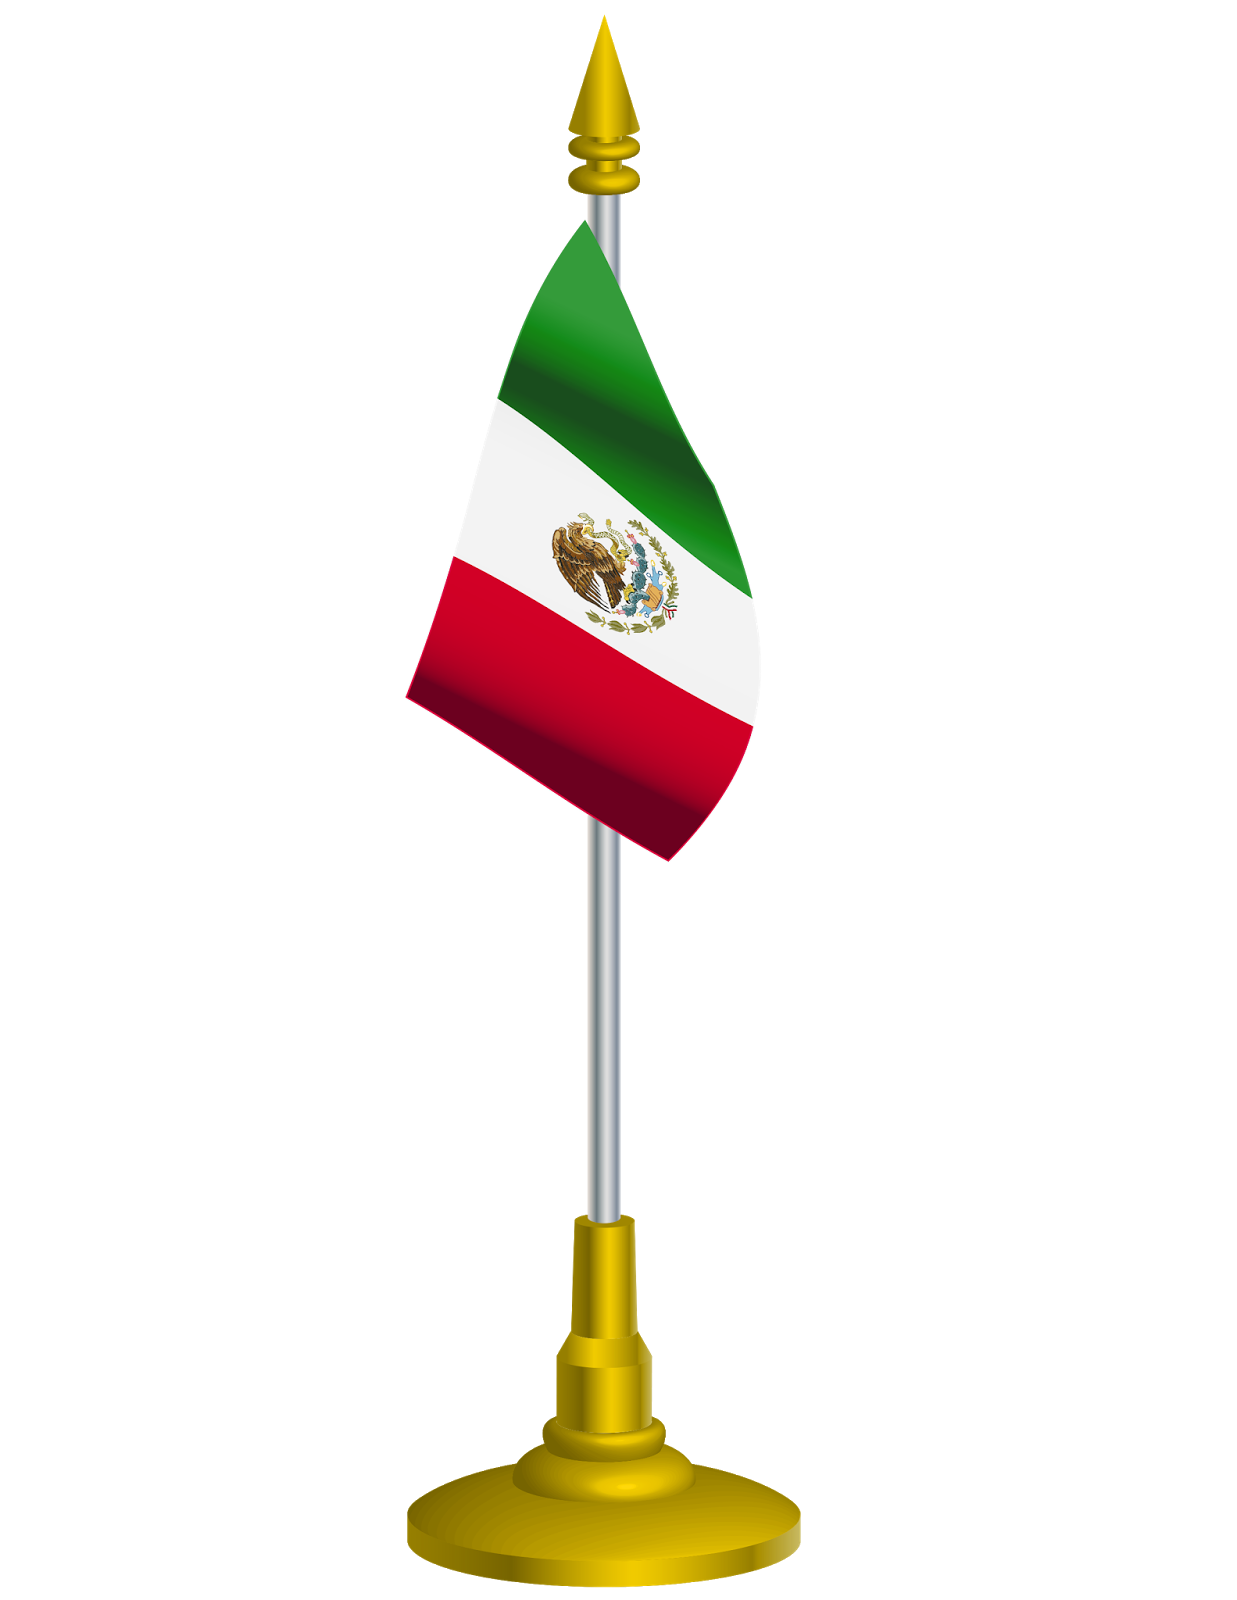 Result Images Of Bandera De Mexico Imagenes Gratis Png Image Collection